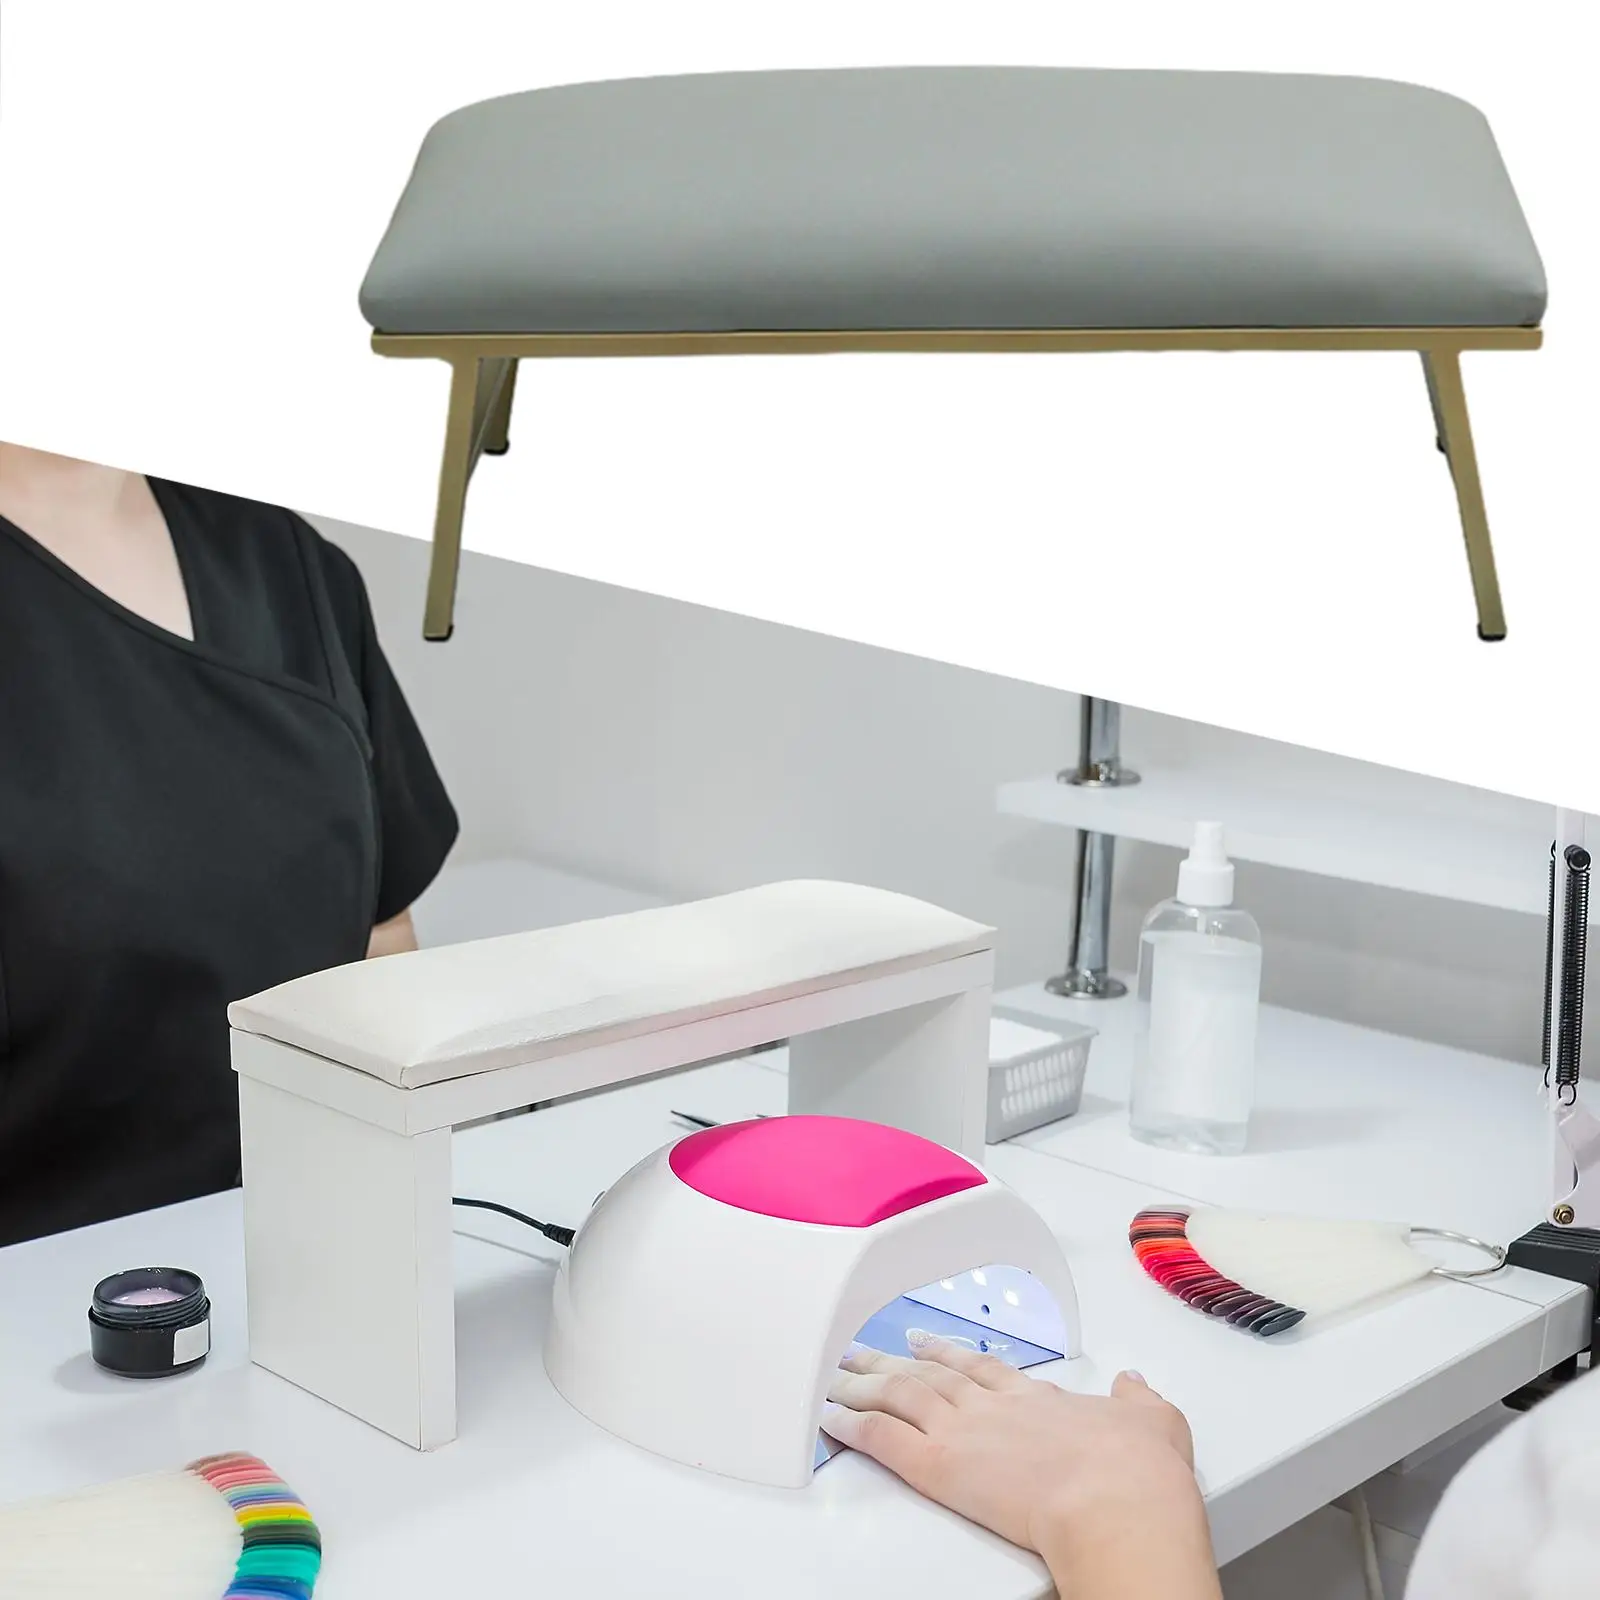 Nail Arm Rest Non Slip Table Premium Pad Accessory Arm Rest for Nails for Home Manicurist Salon Nail Technician Use